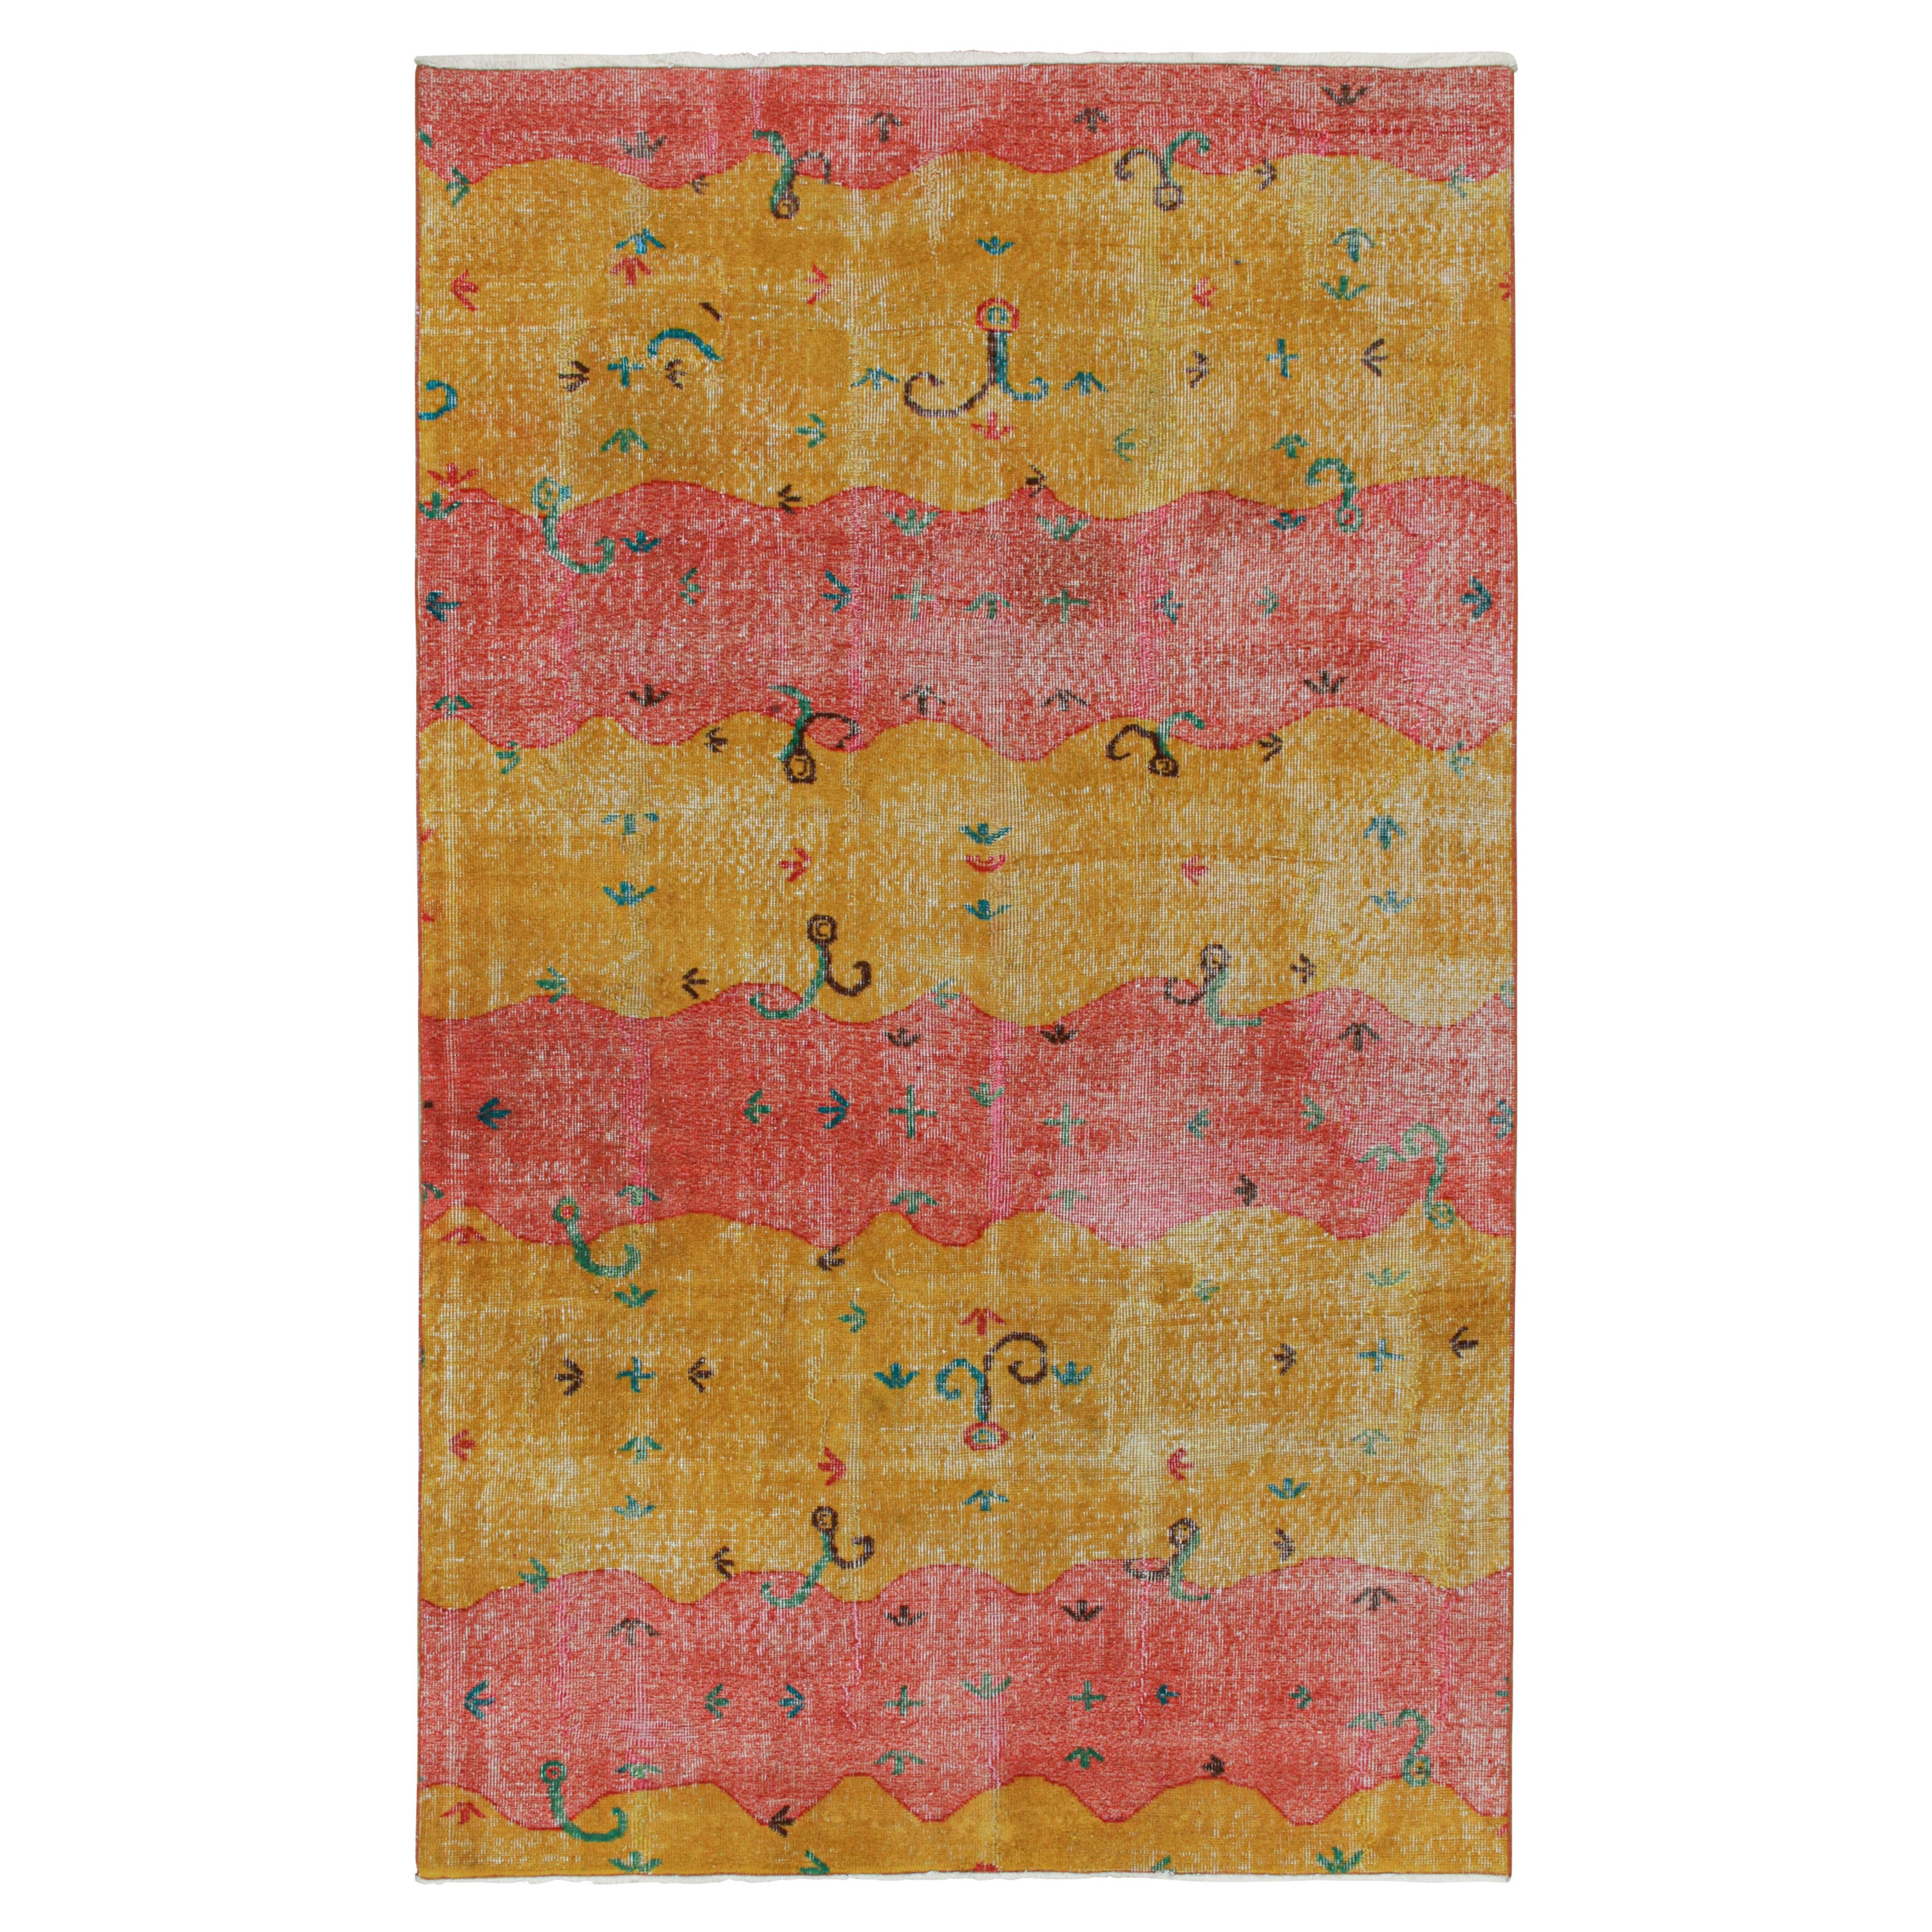 Vintage Zeki Müren Rug in Red & Gold with Vibrant Patterns by Rug & Kilim For Sale